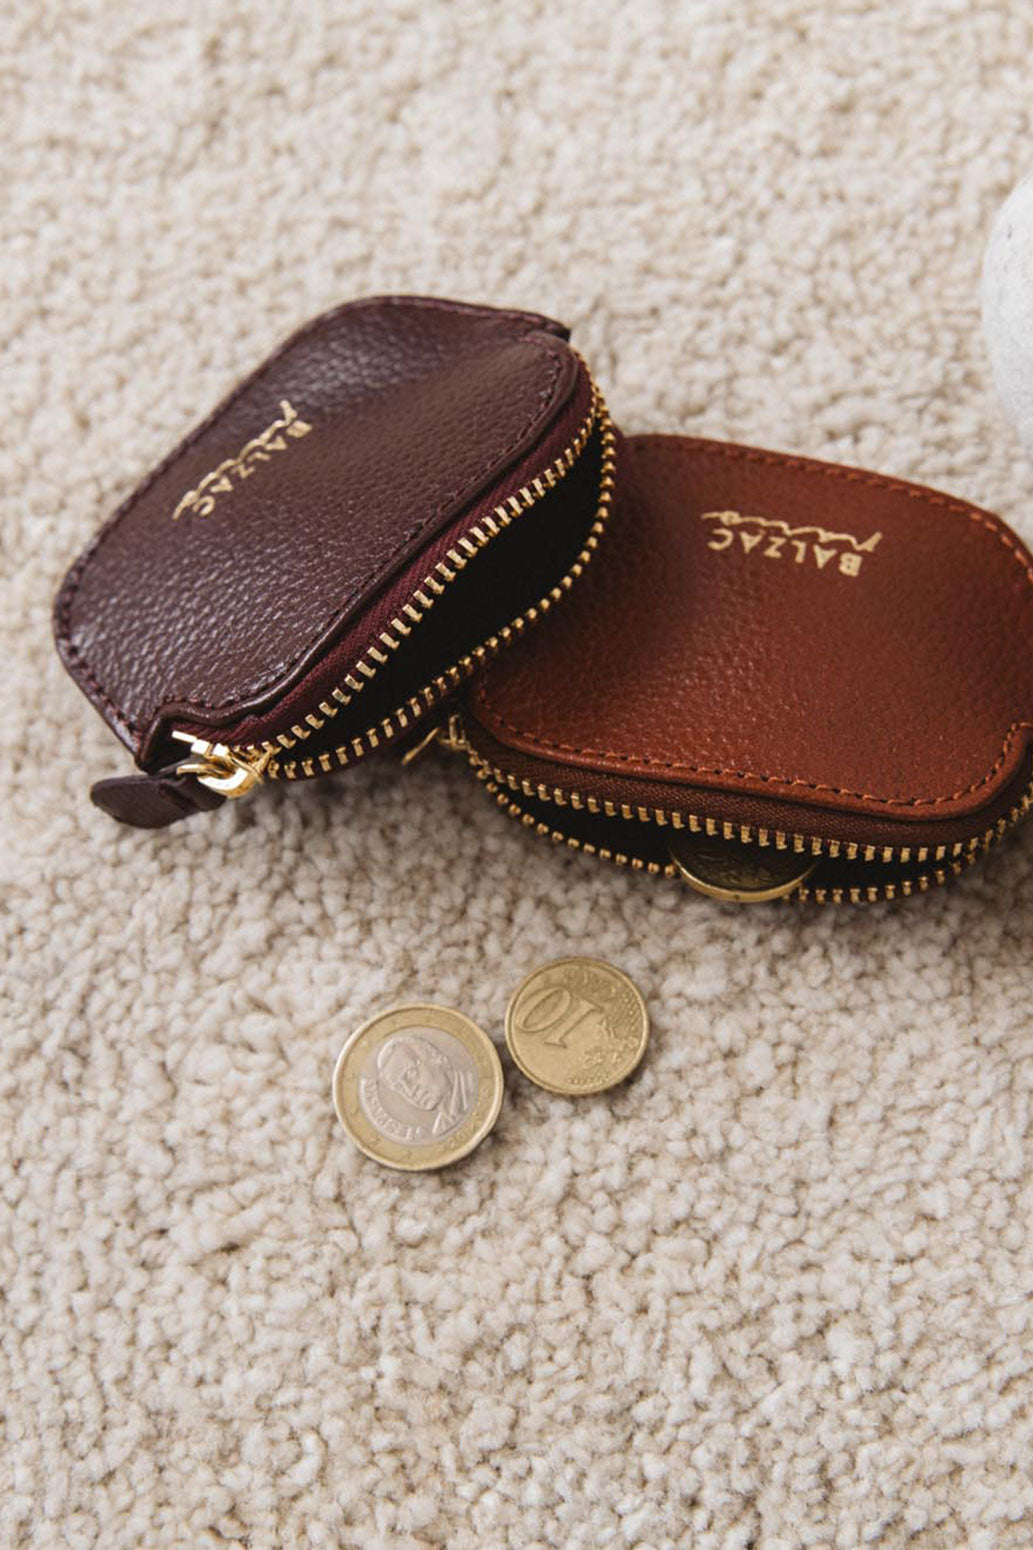 Burgundy Ziggy coin purse